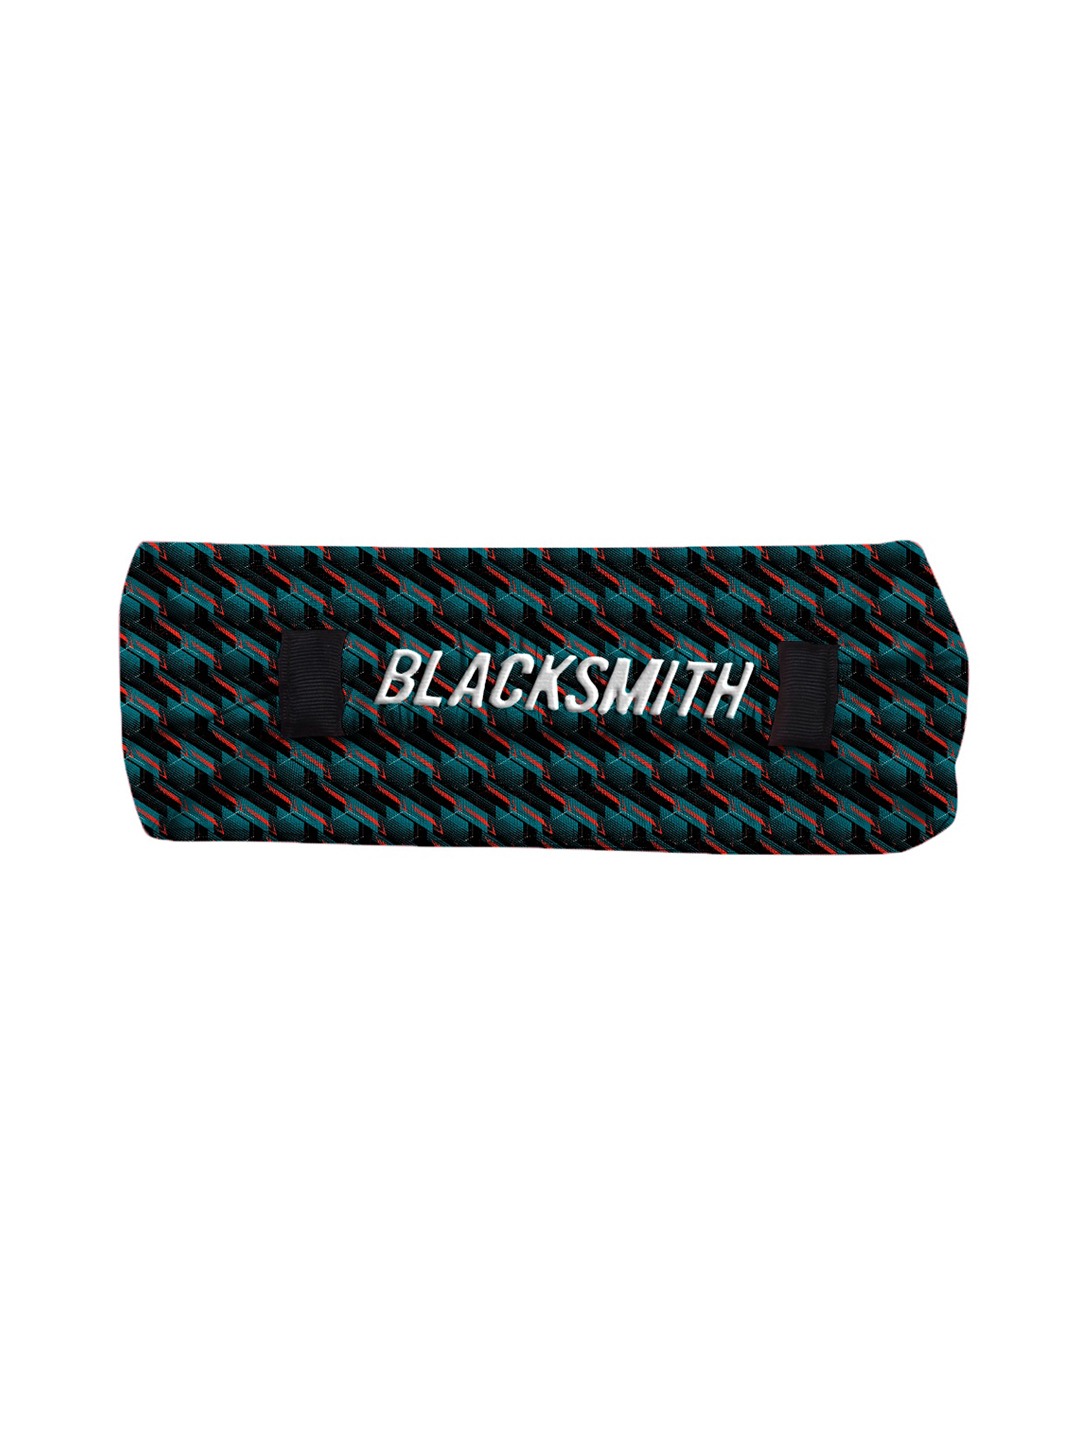 Accessories Headband | Blacksmith Black & Red Printed Headband - AP15085